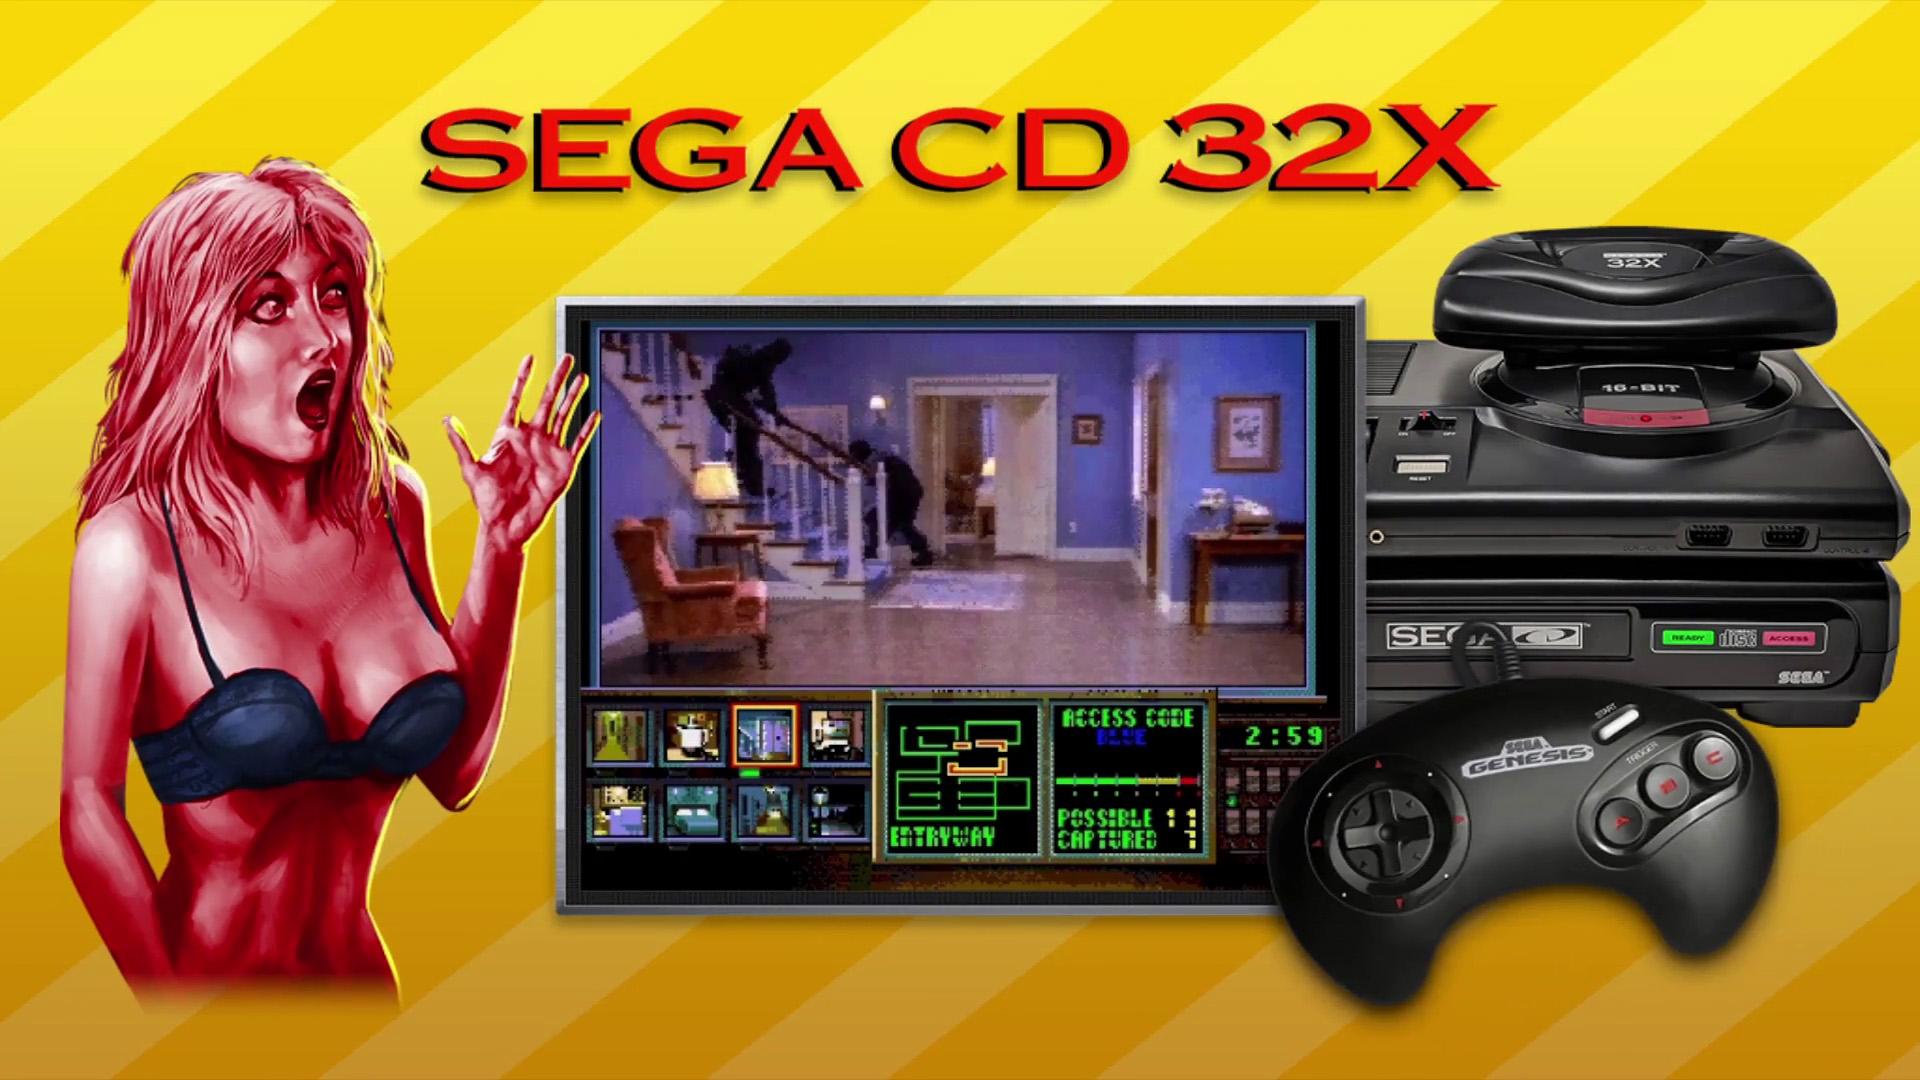 Sega CD 32X Unified Platform Video